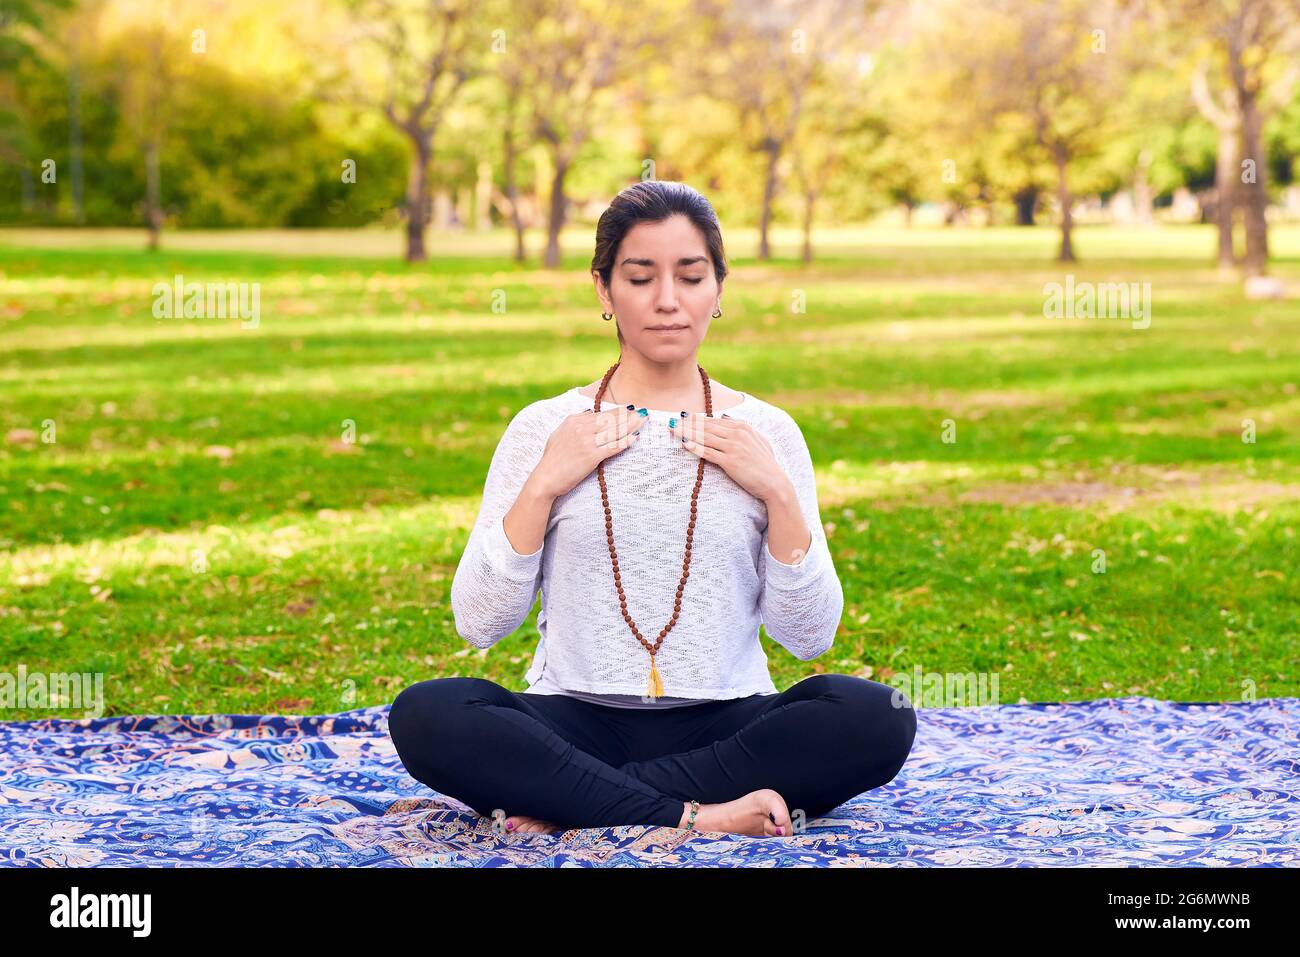 Latin woman performing Reiki poses in a park. Yoga meditation. Stock Photo